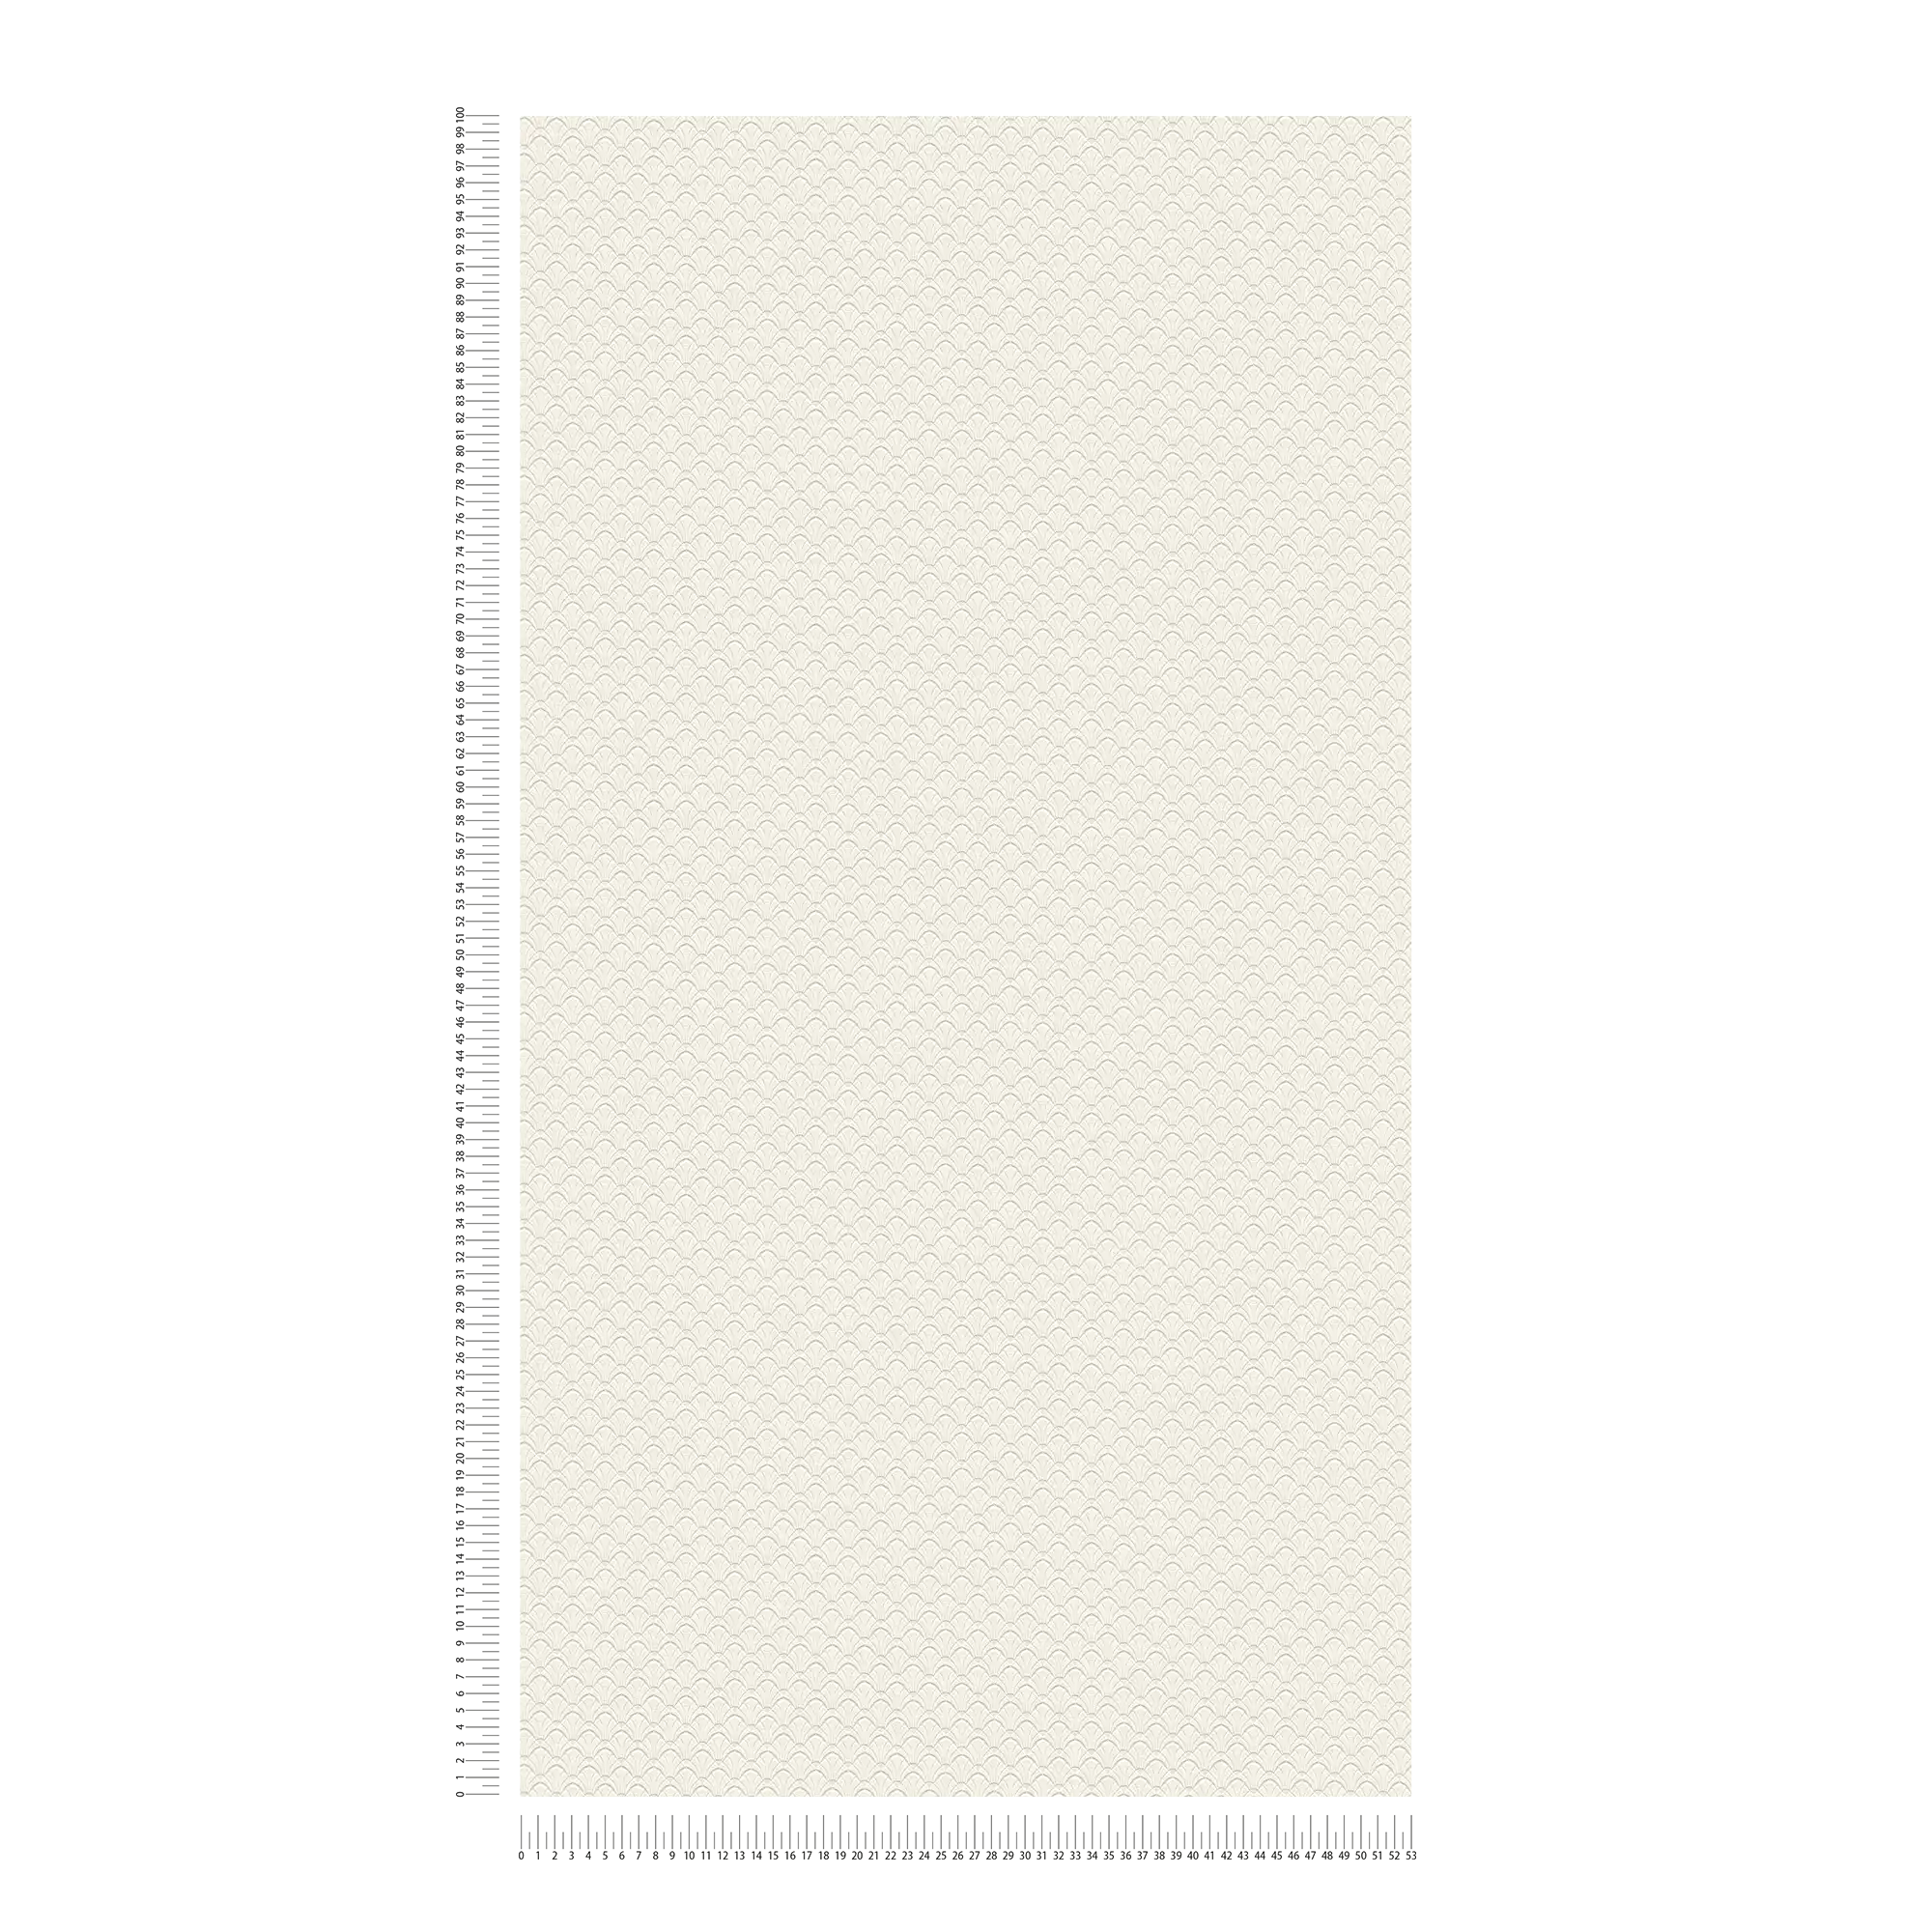             Wallpaper filigree structure pattern in shell design - cream, white
        